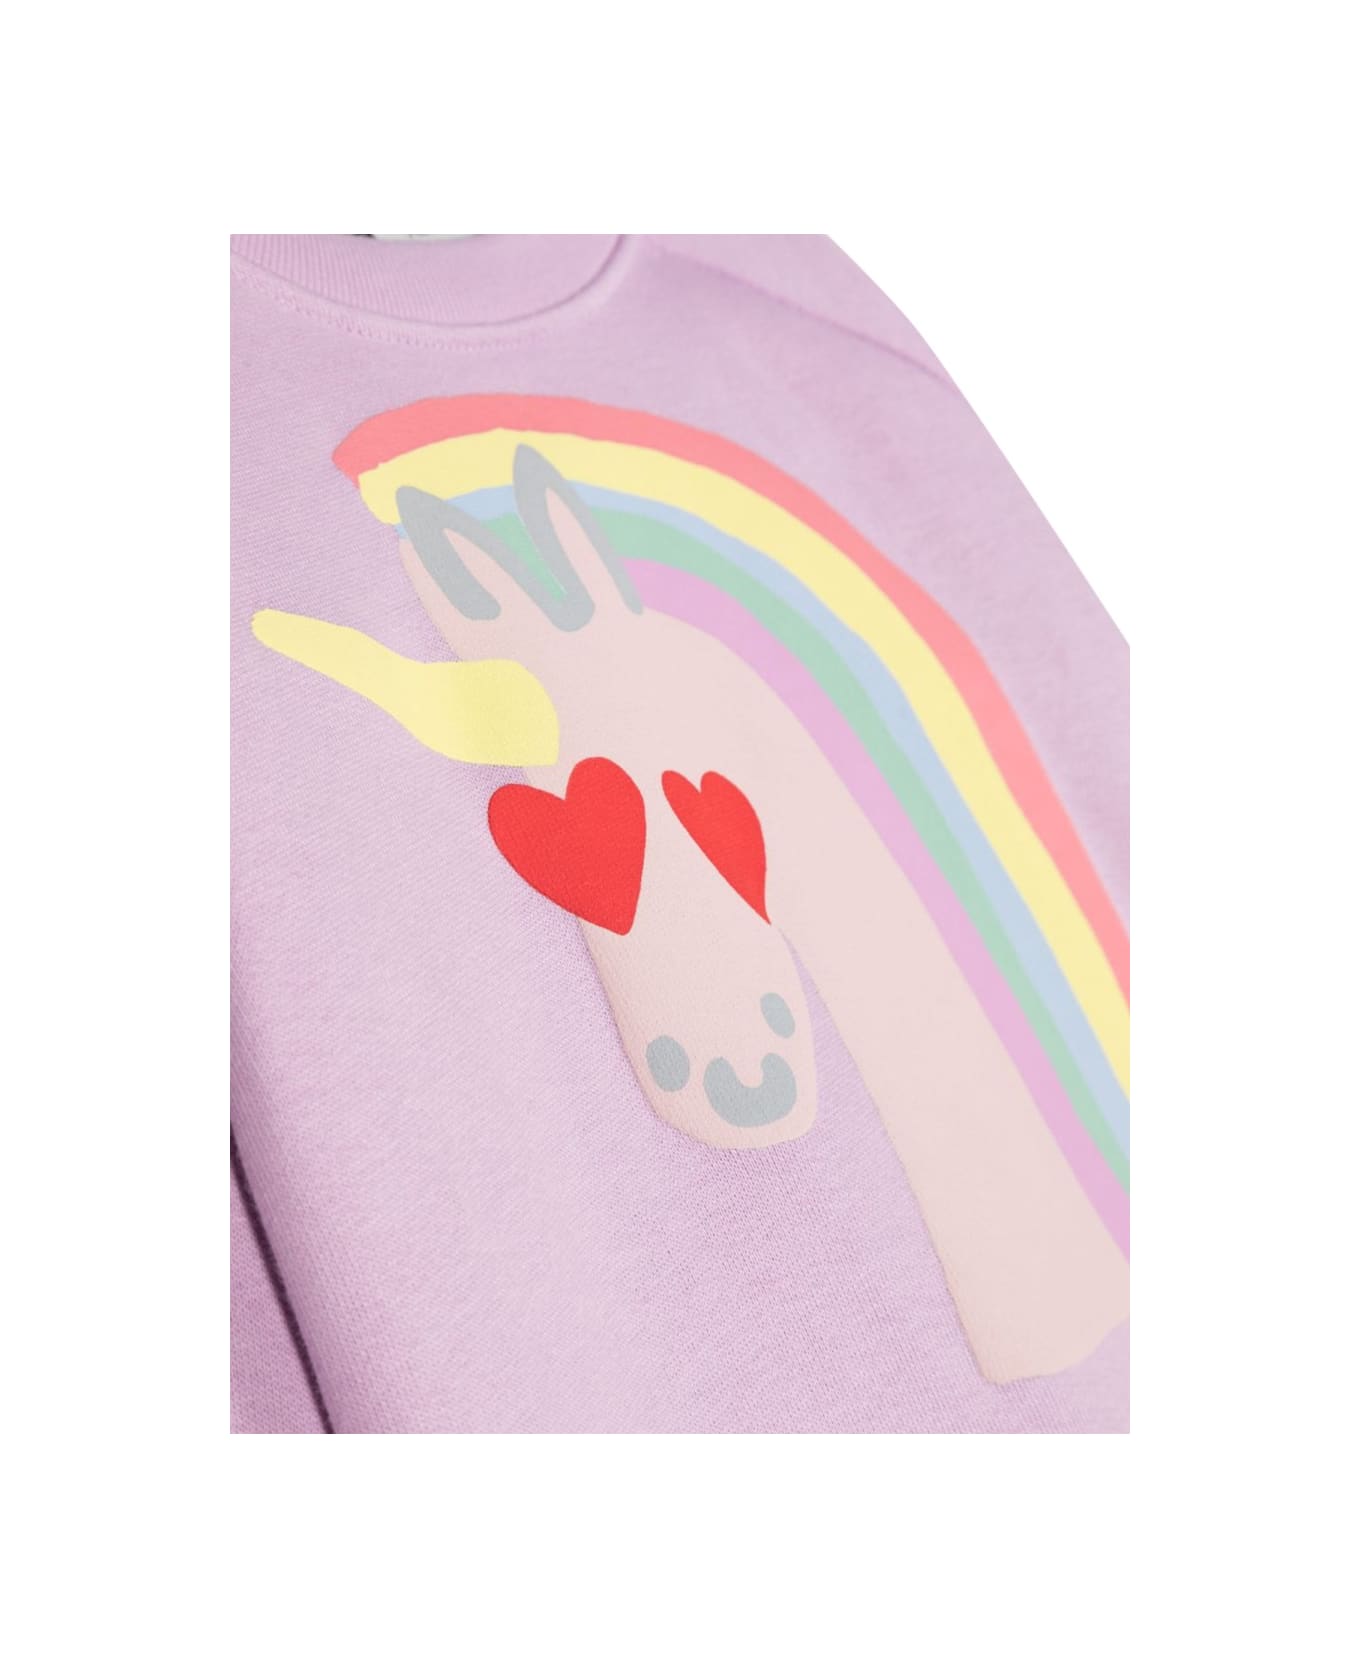 Stella McCartney Kids Unicorn Crewneck Sweatshirt - LILAC